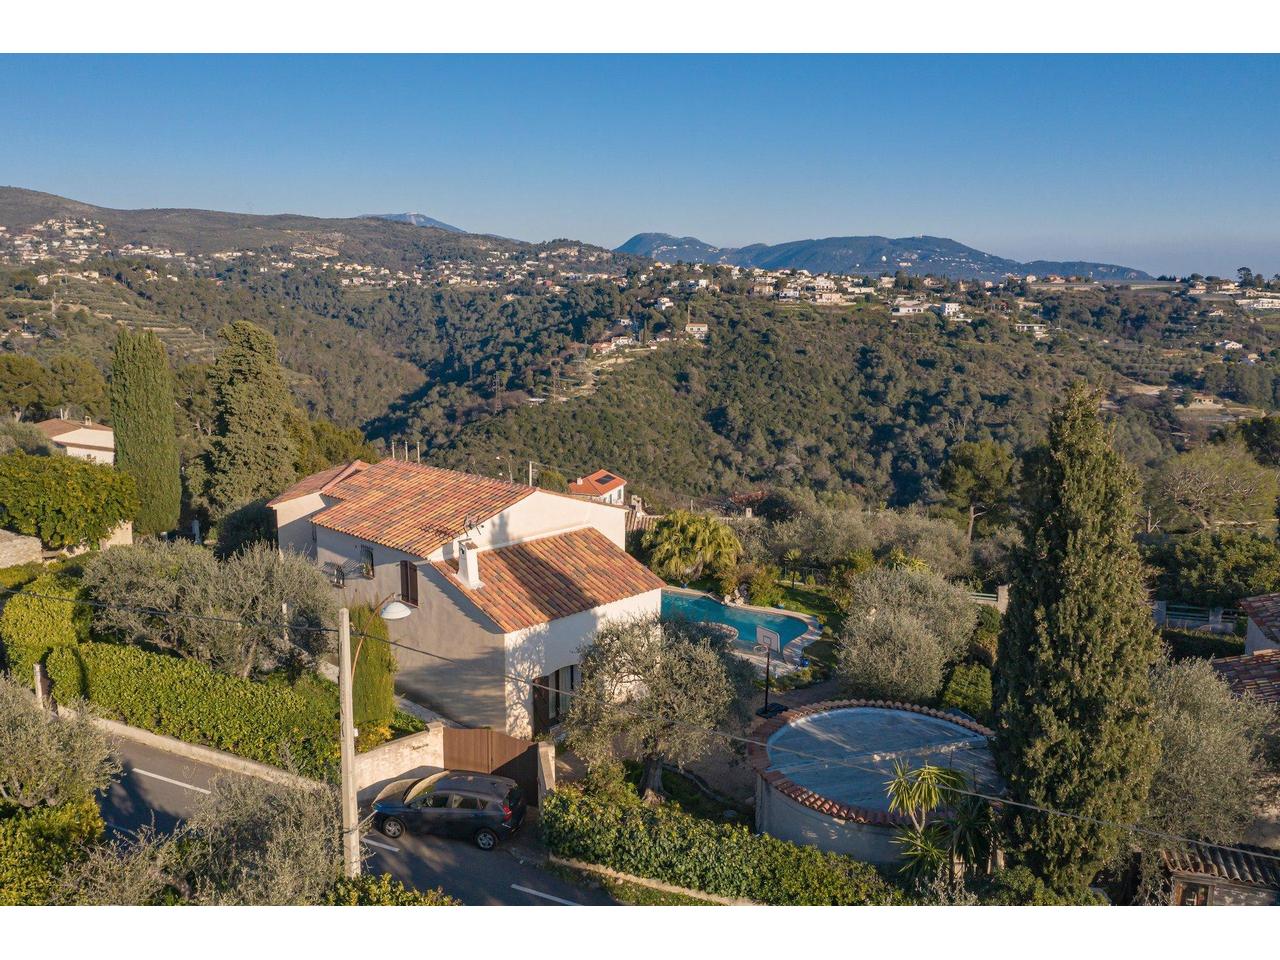 Nice Riviera - Agence Immobiliére Nice Côte d'Azur | Maison  6 Rooms 187m2  for sale   954 000 €